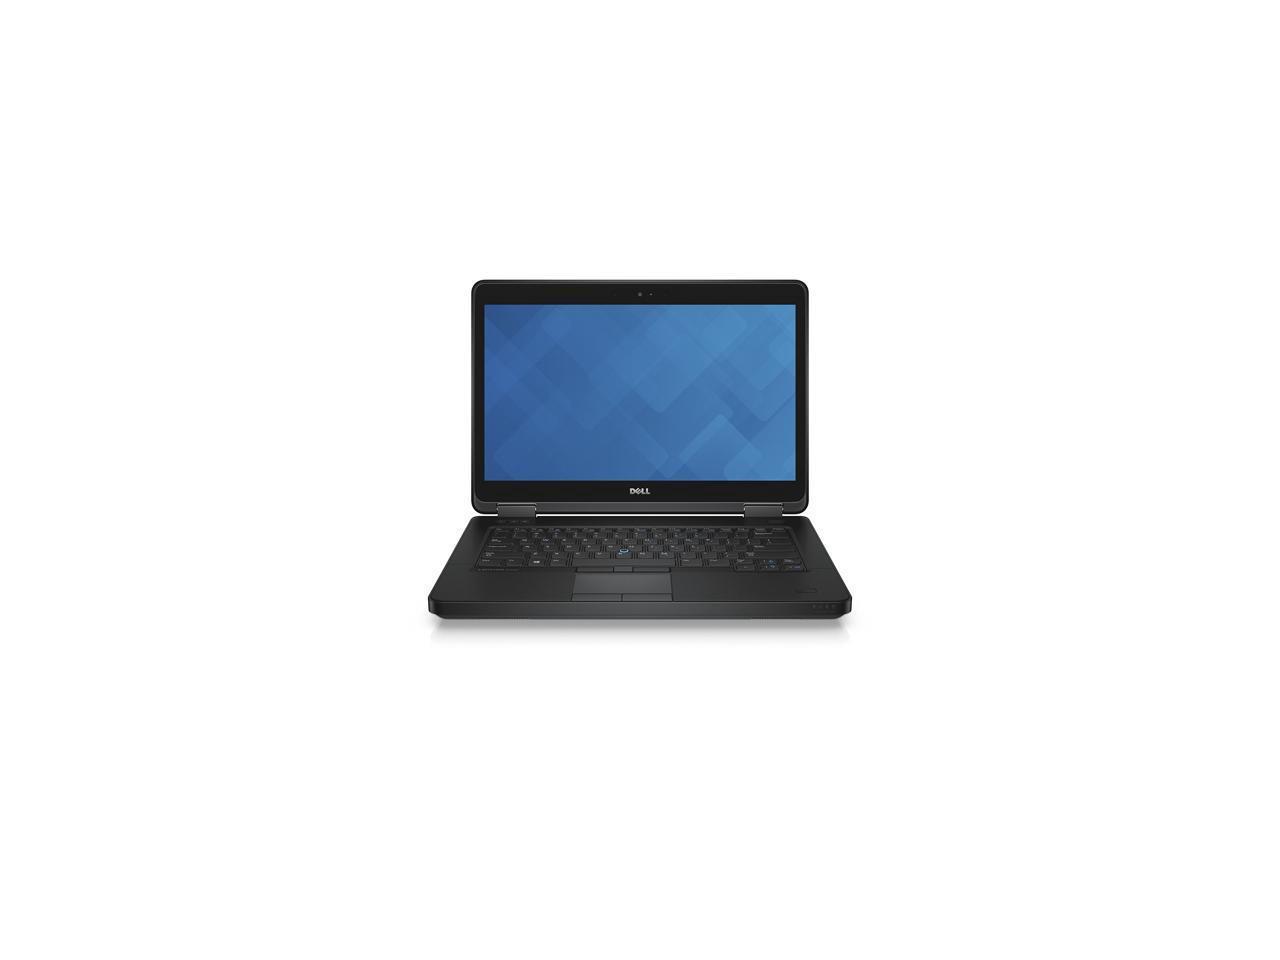 Refurbished Dell Latitude E5440 Laptop Computer Intel Core i5 Processor, 8GB Ram, 500GB Hard Drive, Windows 10 Operating System, 1 Year Warranty